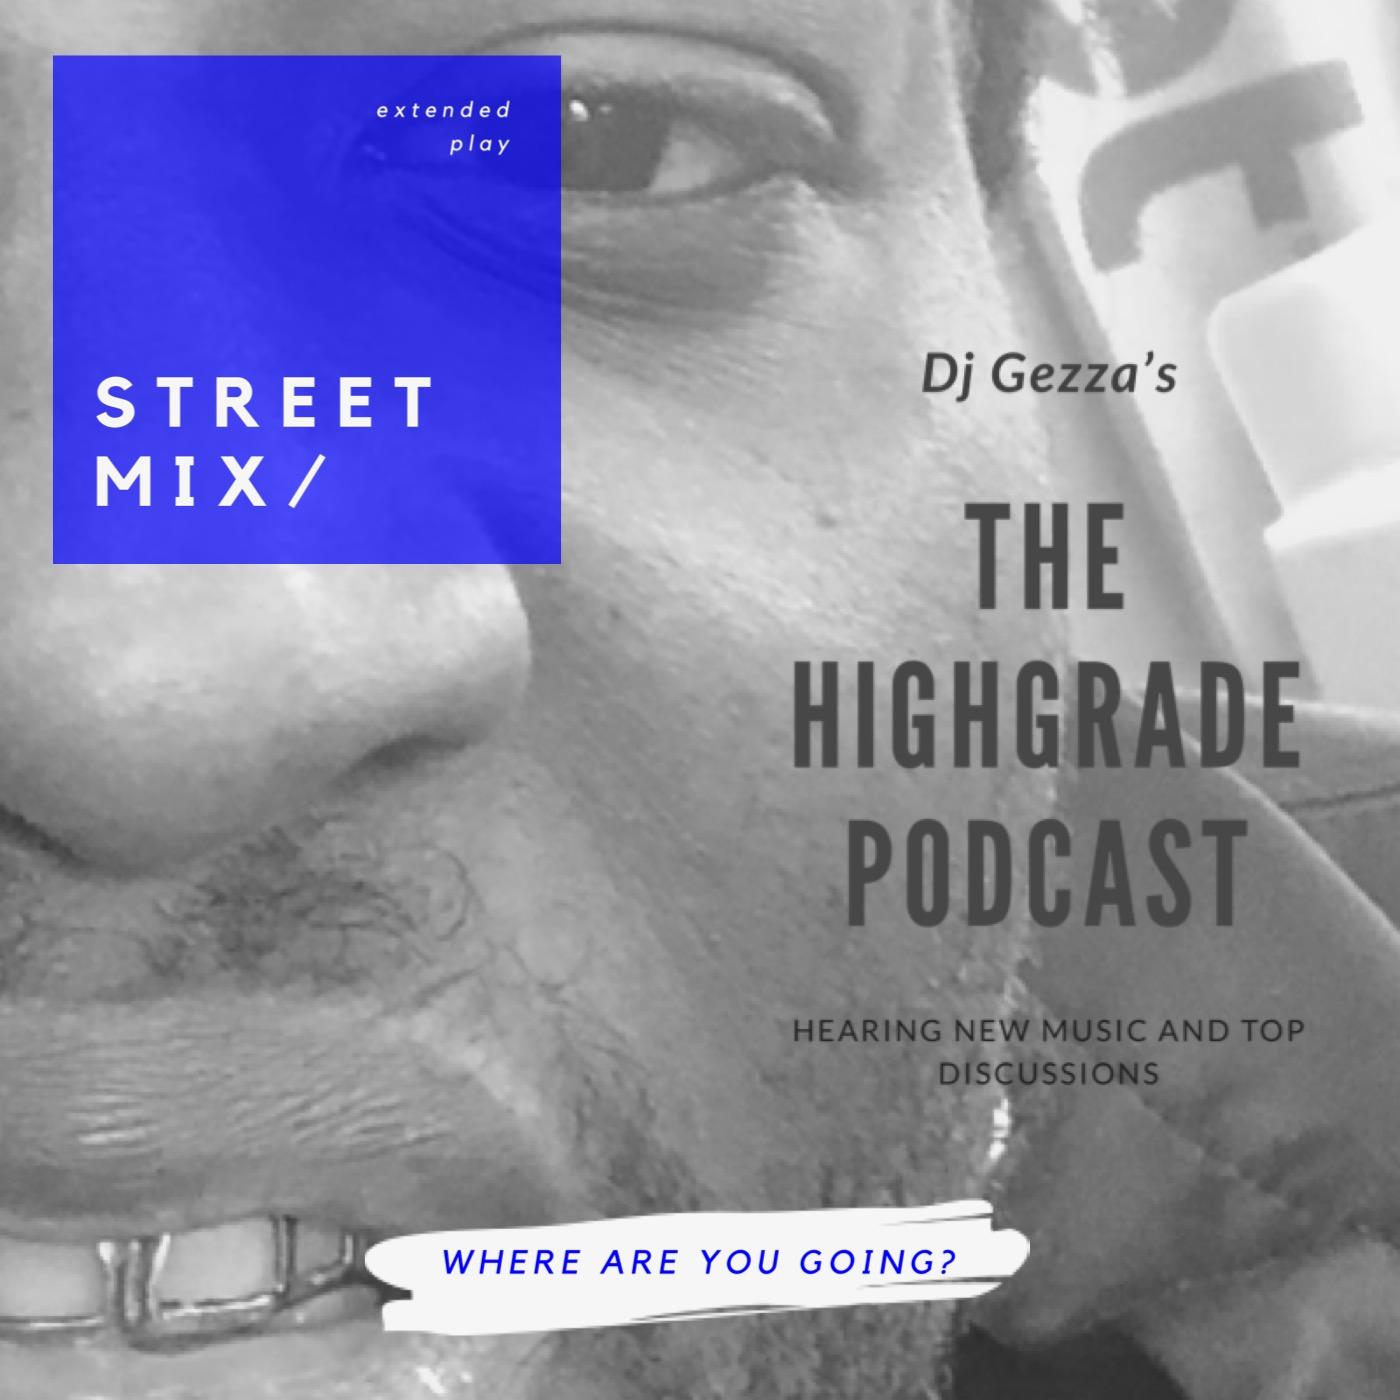 The Highgrade Podcast